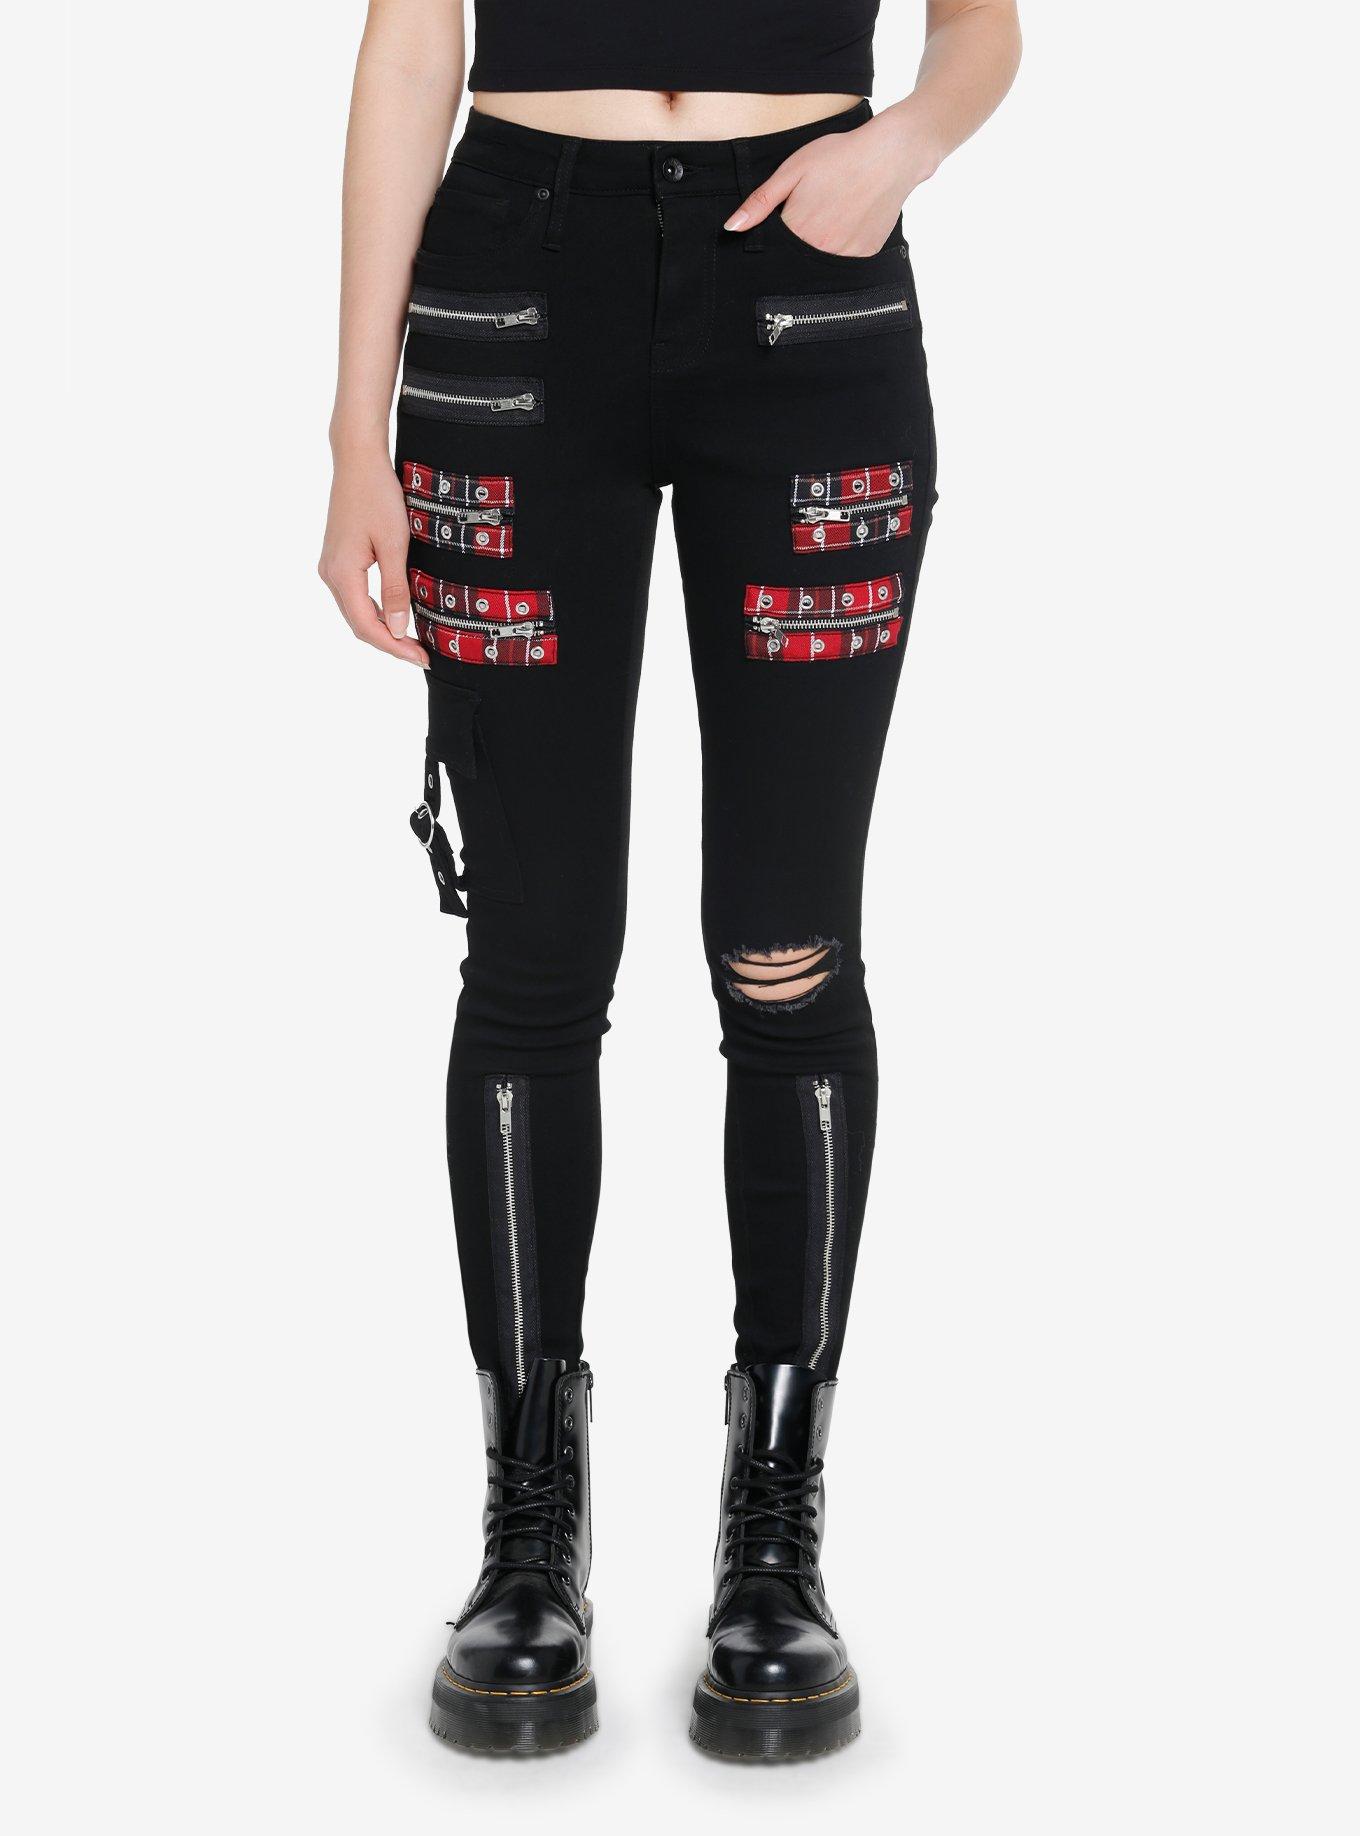 Black Zipper Grommet Super Skinny Jeans, BLACK, hi-res